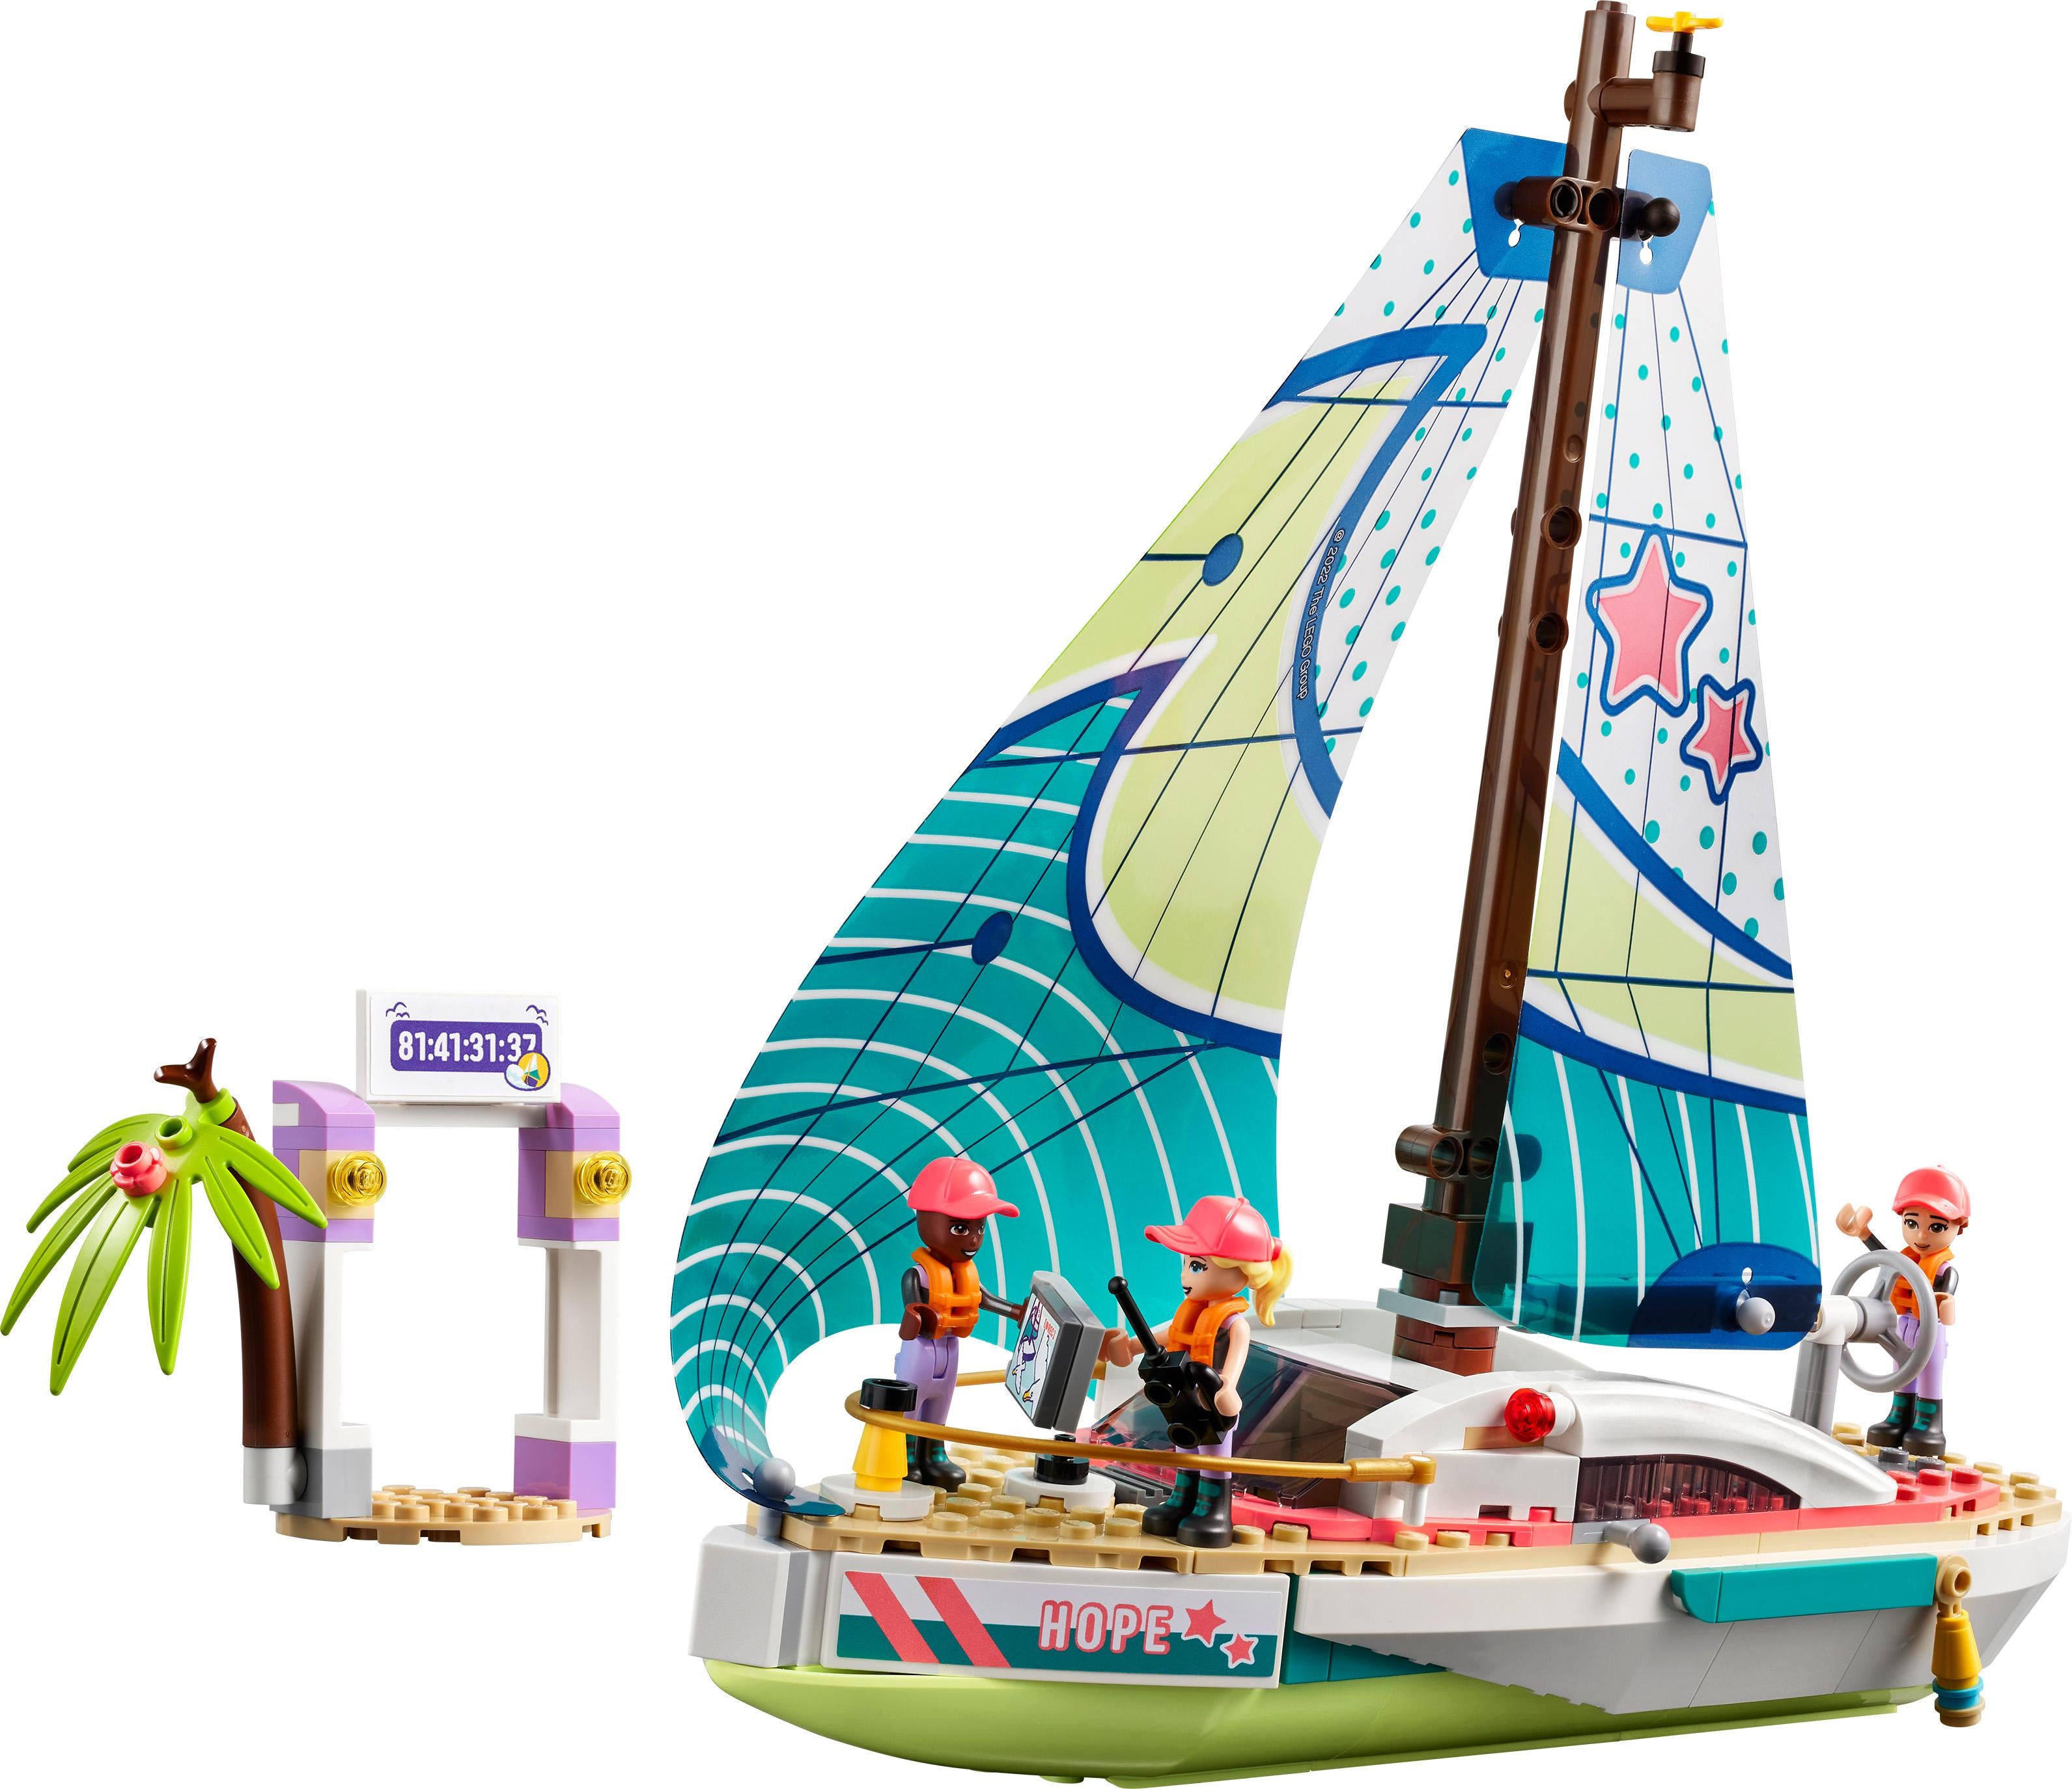 LEGO Friends Stephanies Sailing Adventure 41716